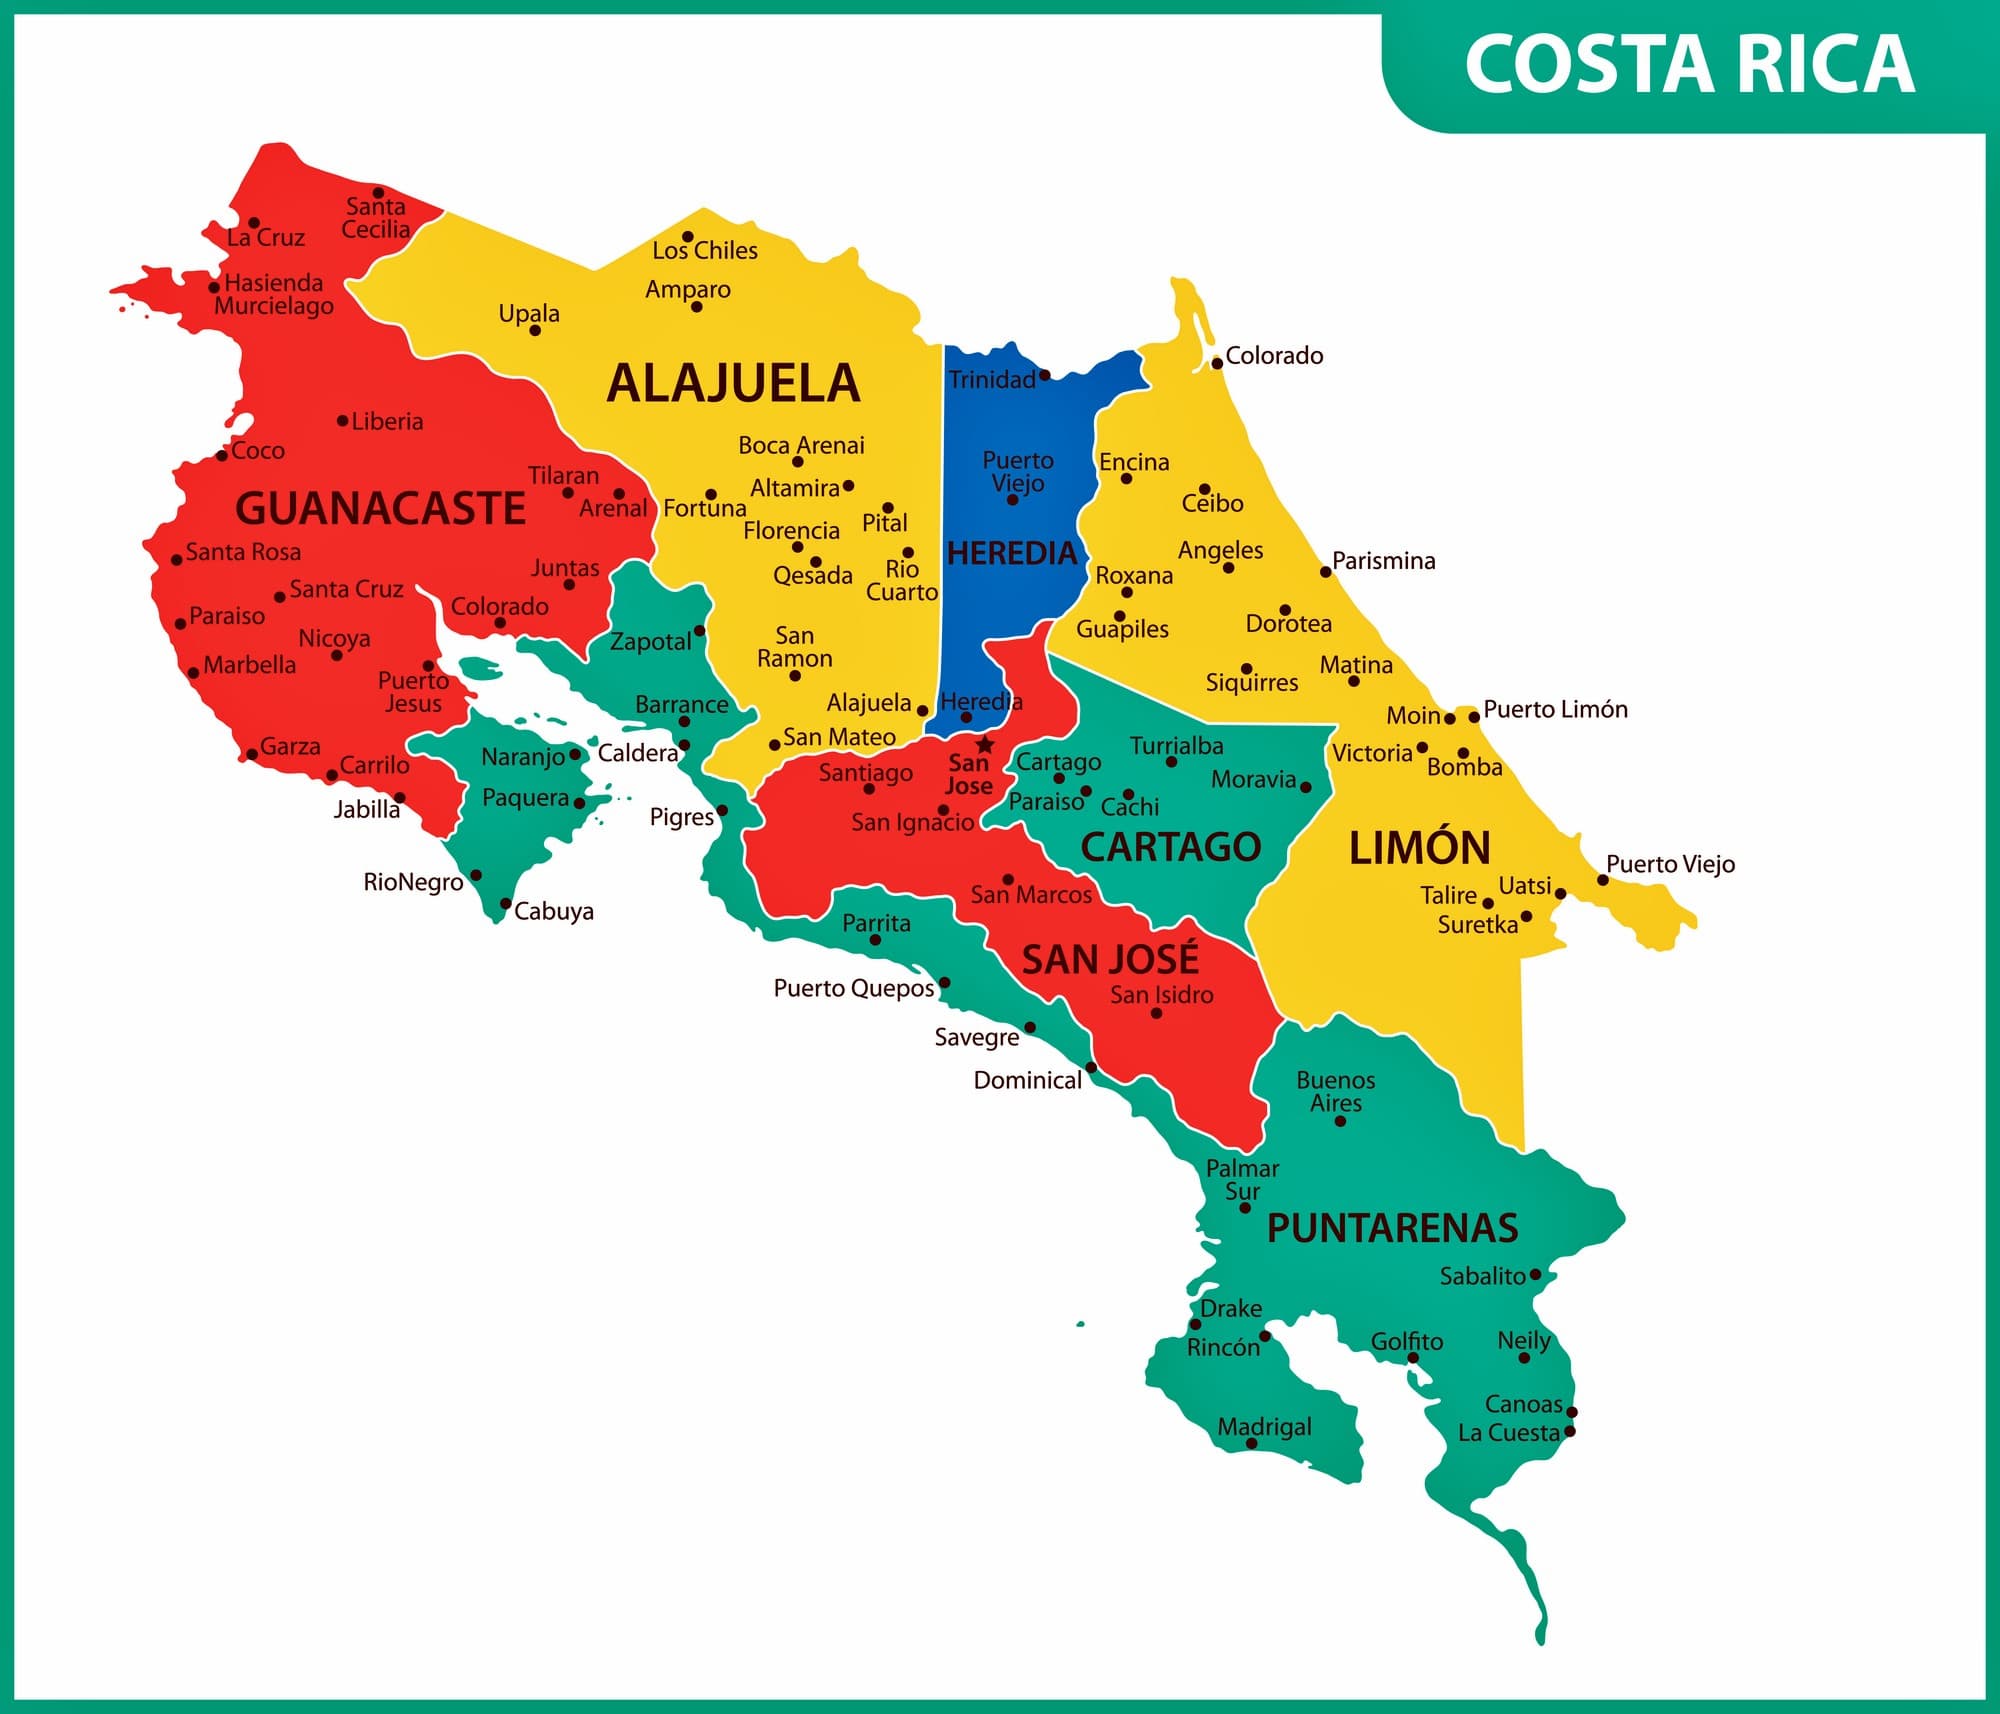 Mapa de Costa Rica